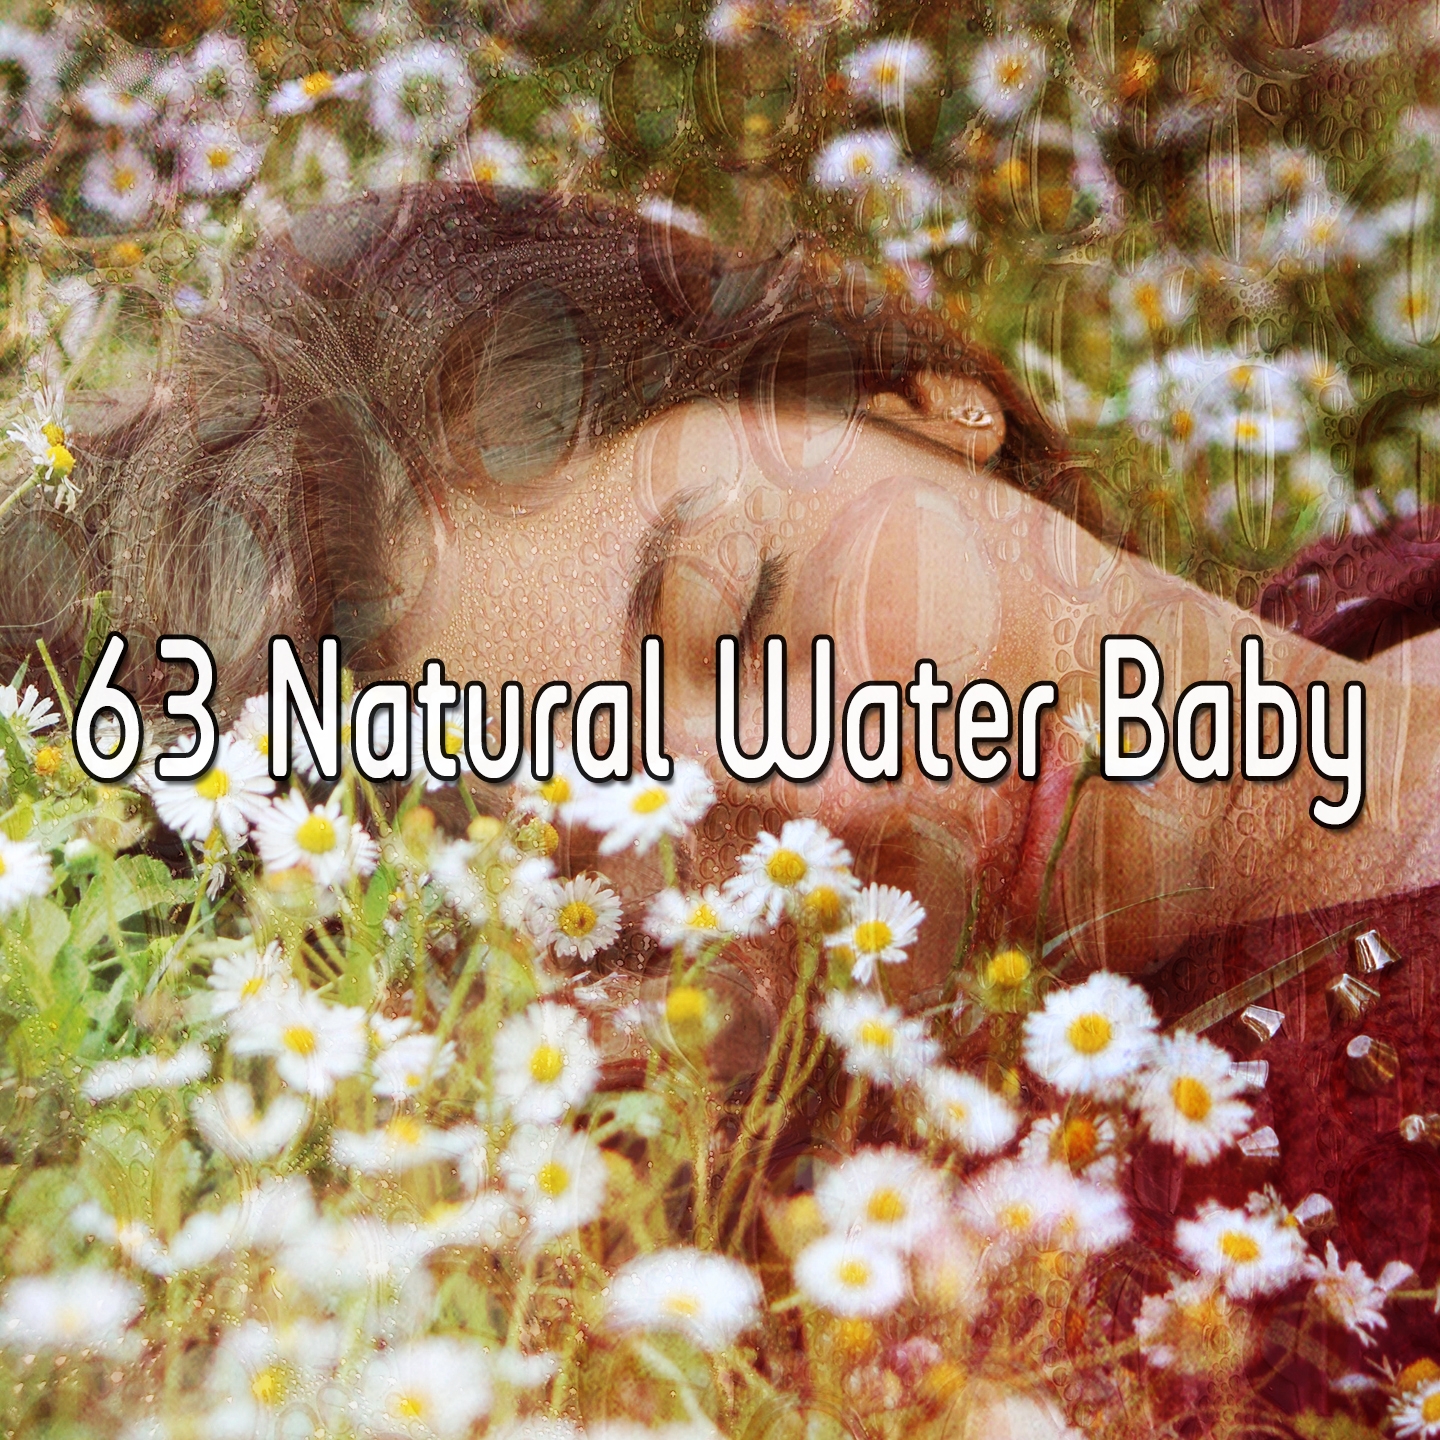 63 Natural Water Baby